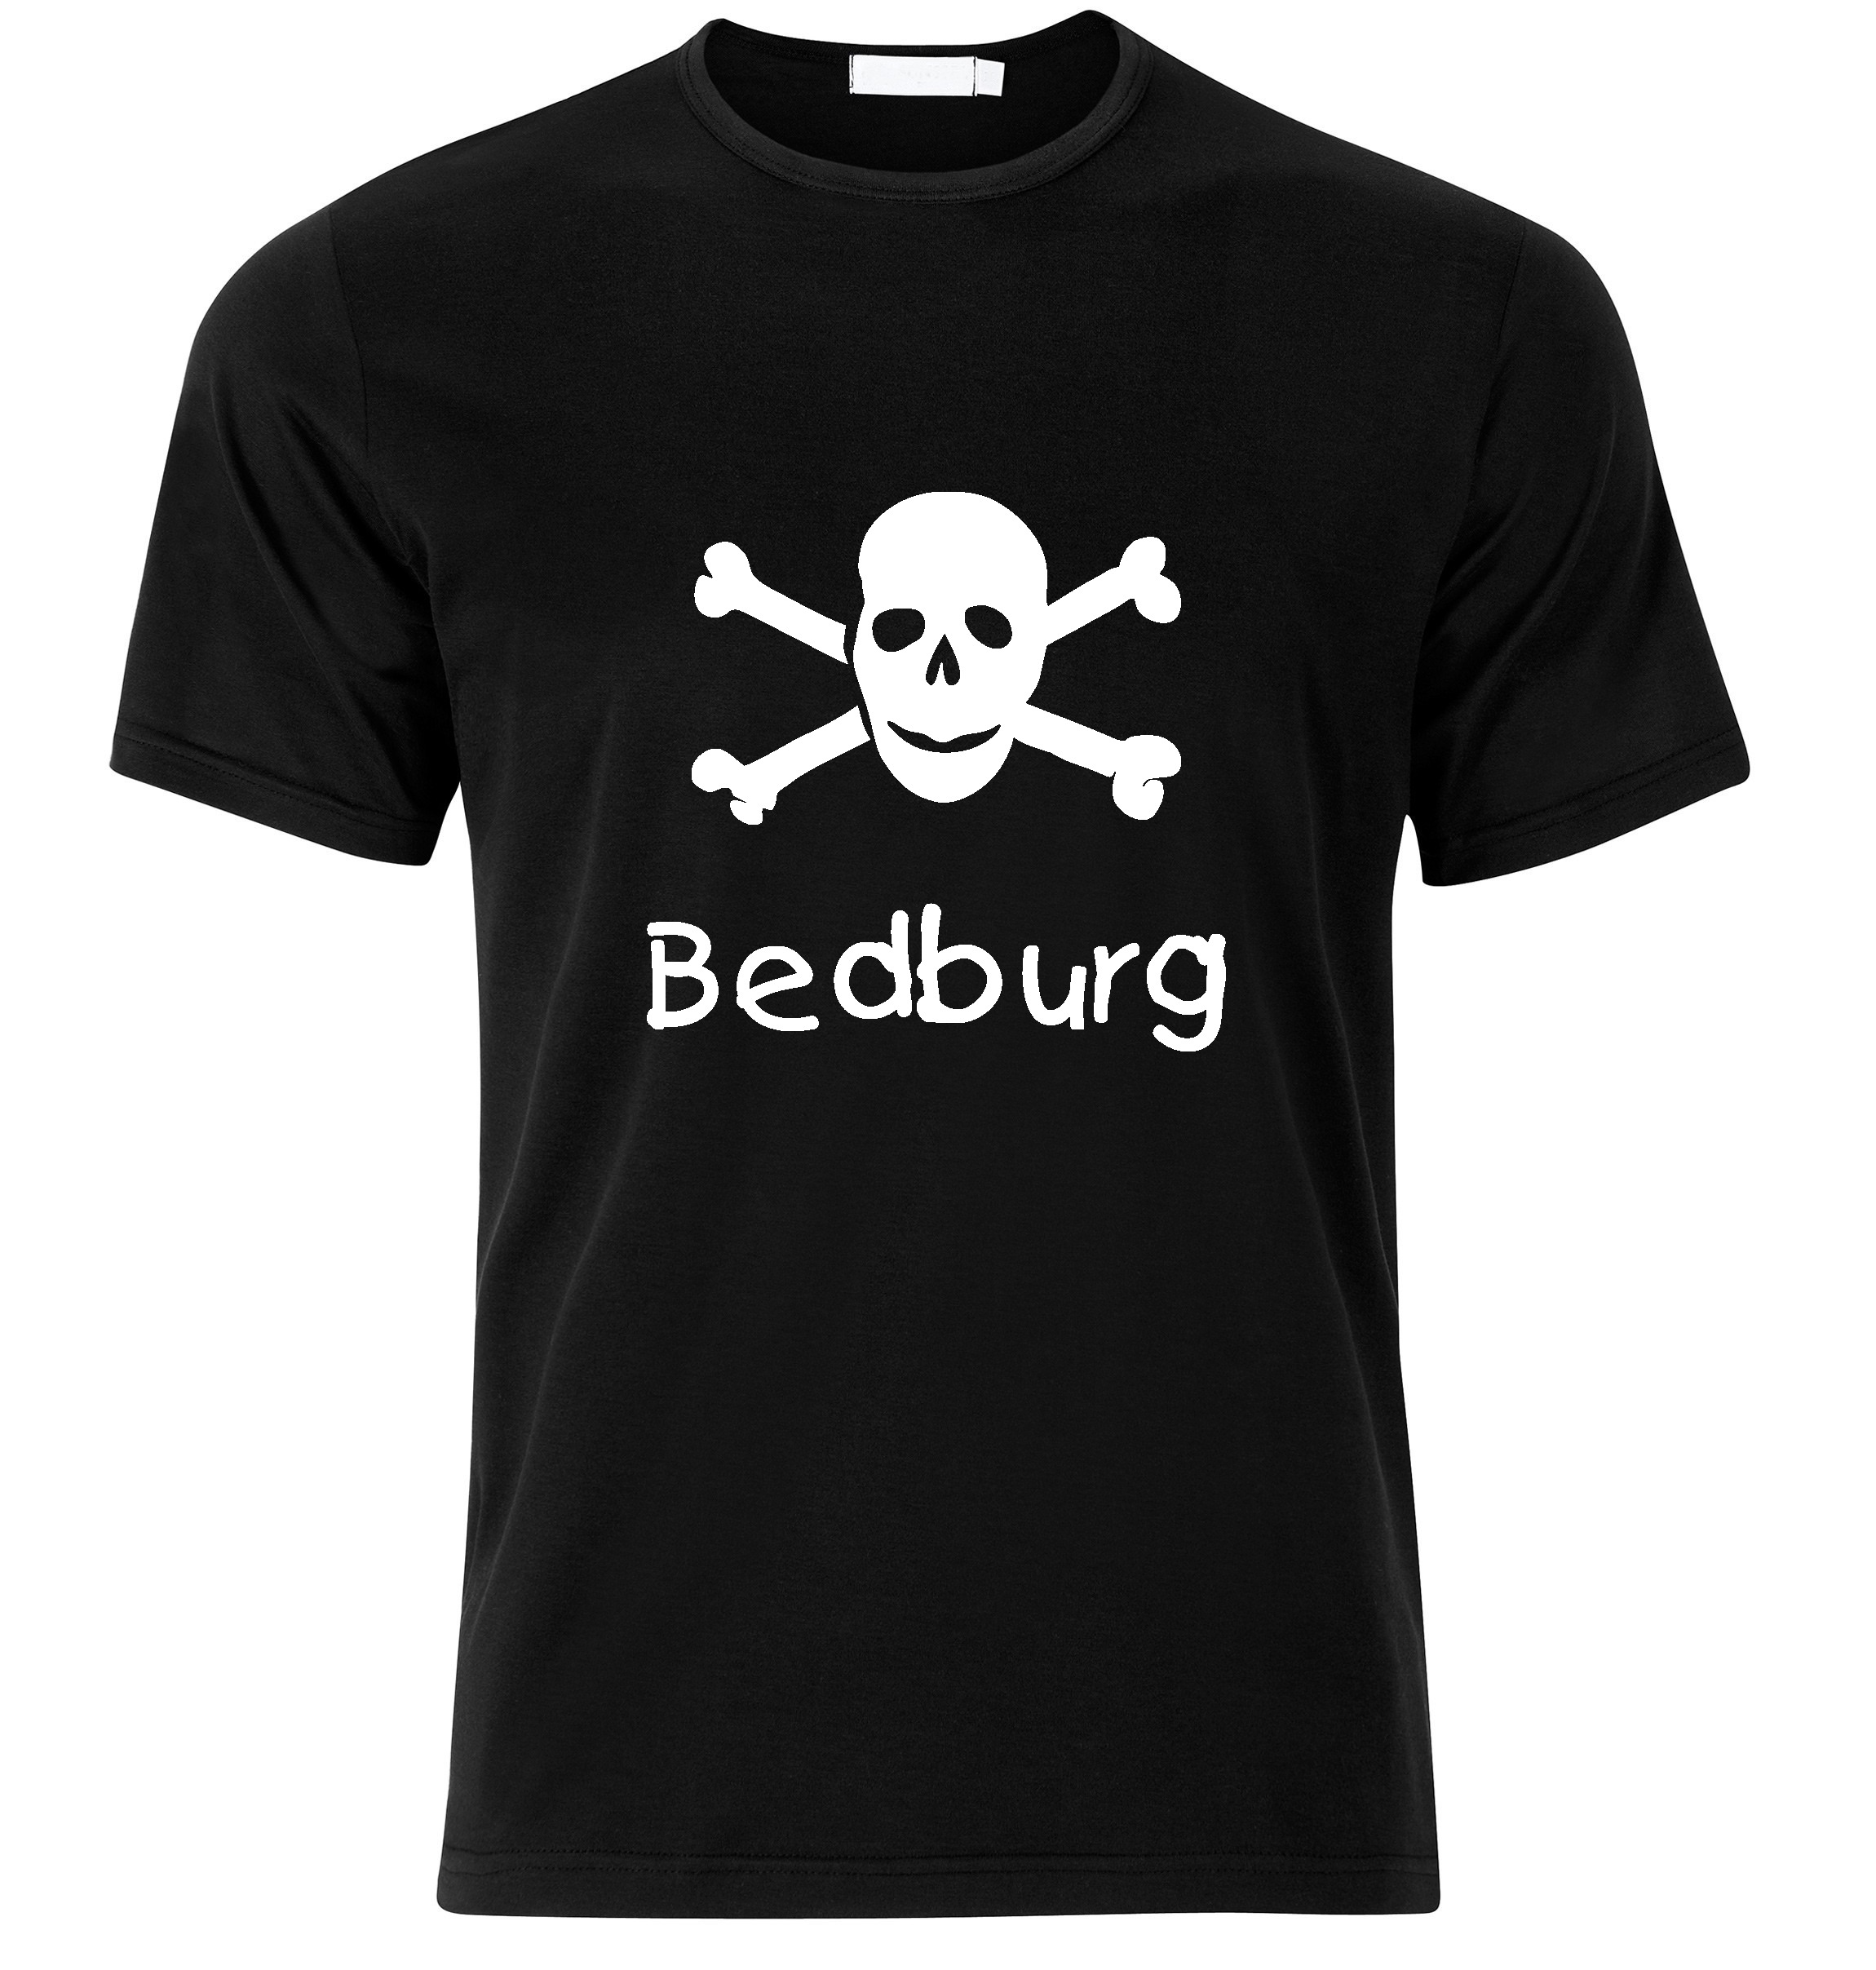 T-Shirt Bedburg Jolly Roger, Totenkopf